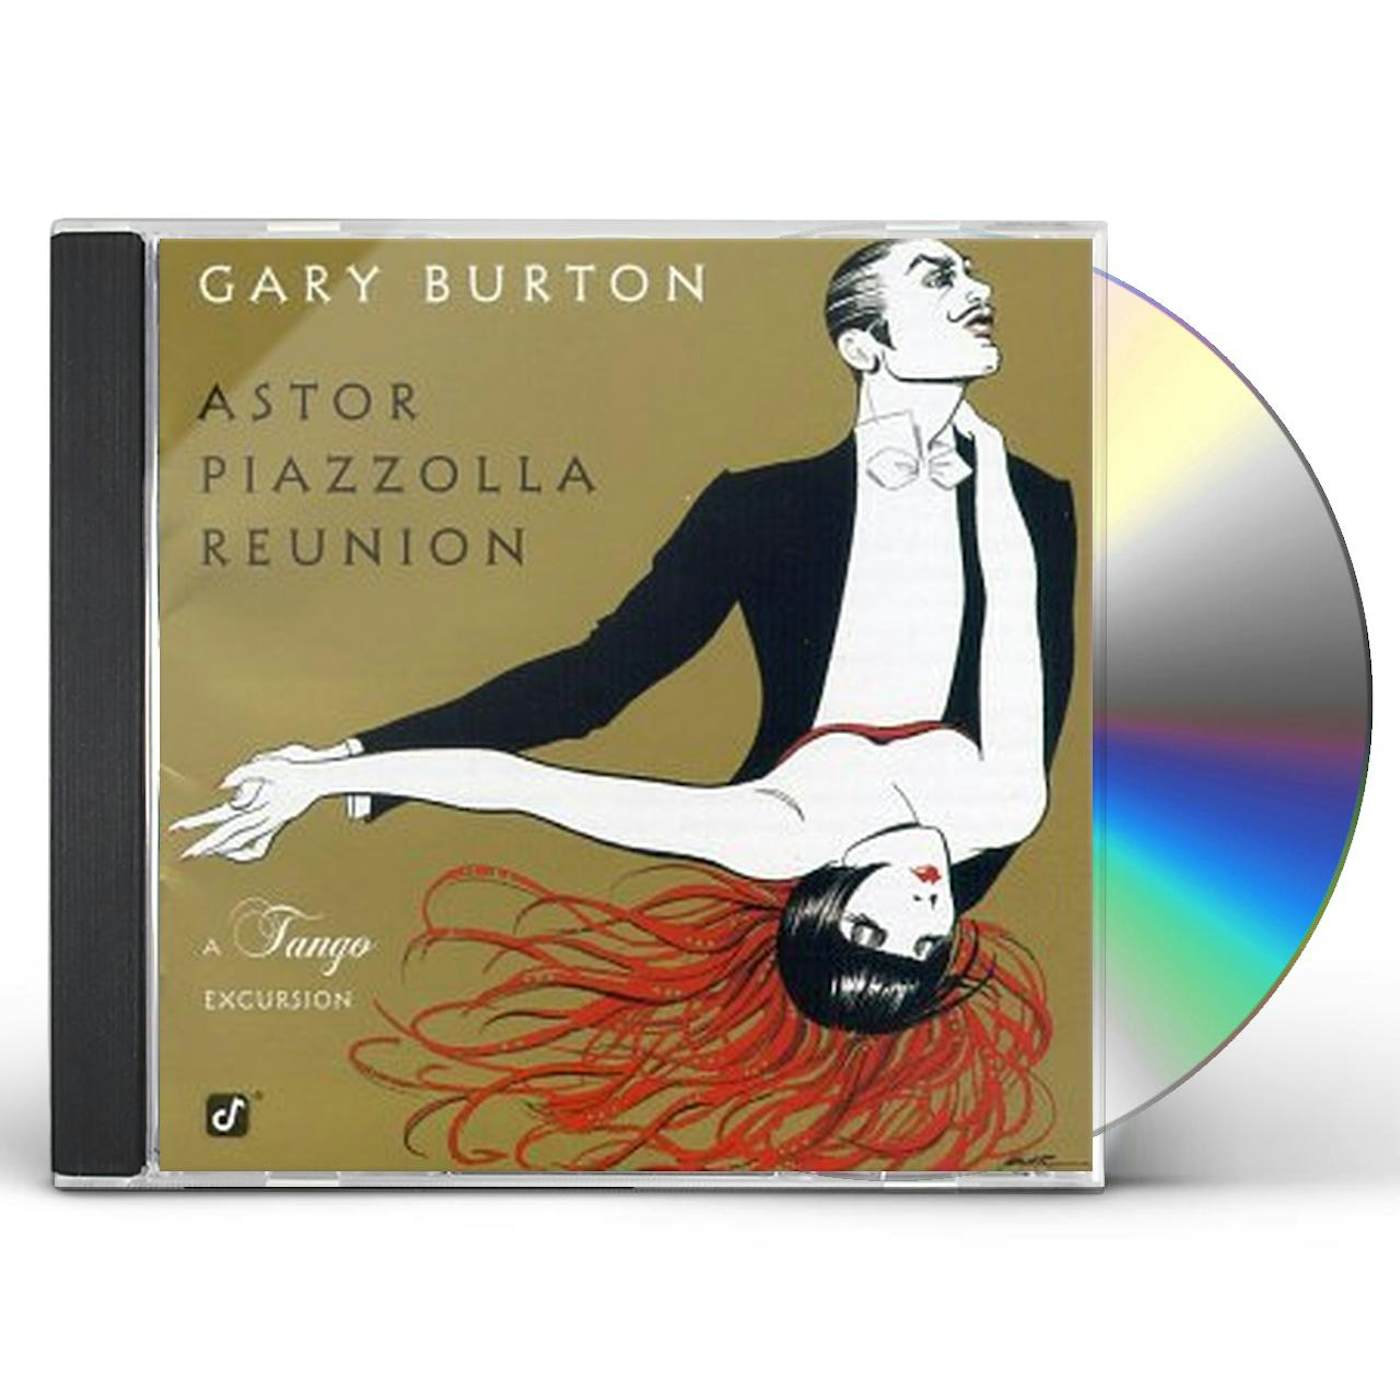 Gary Burton ASTOR PIAZZOLLA REUNION - TANGO EXCURSION CD